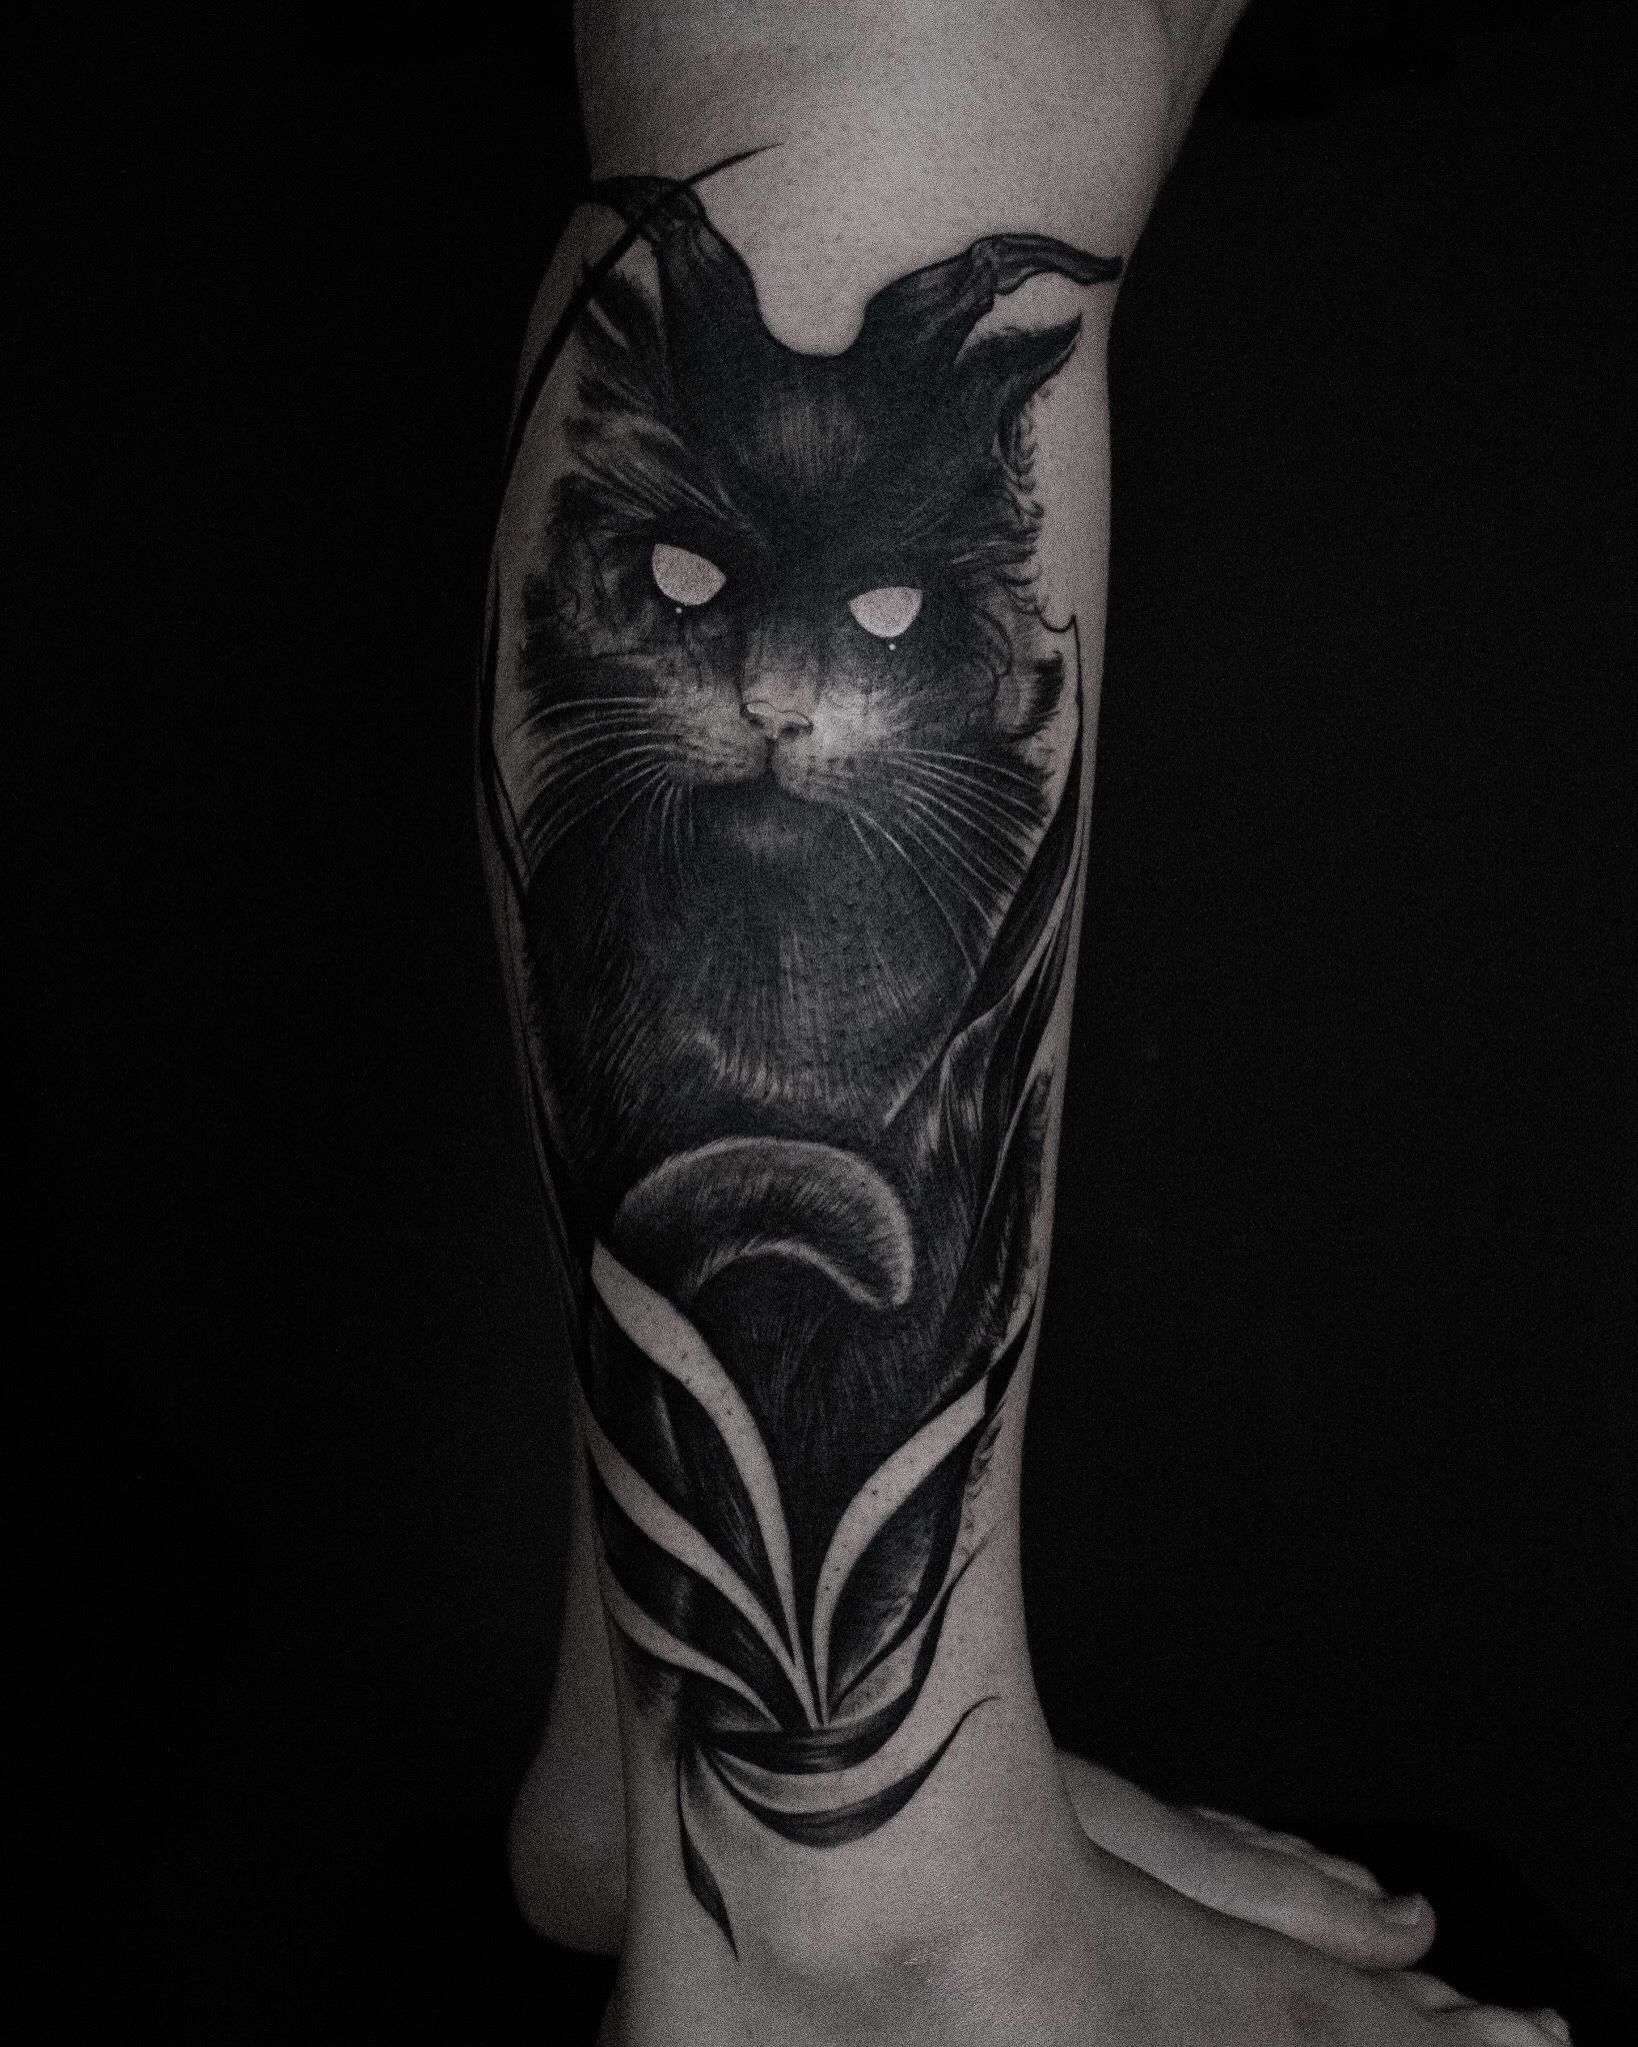 Tattoo uploaded by Alberto Cruz  Wow evil cat Grindesign  Tattoodo